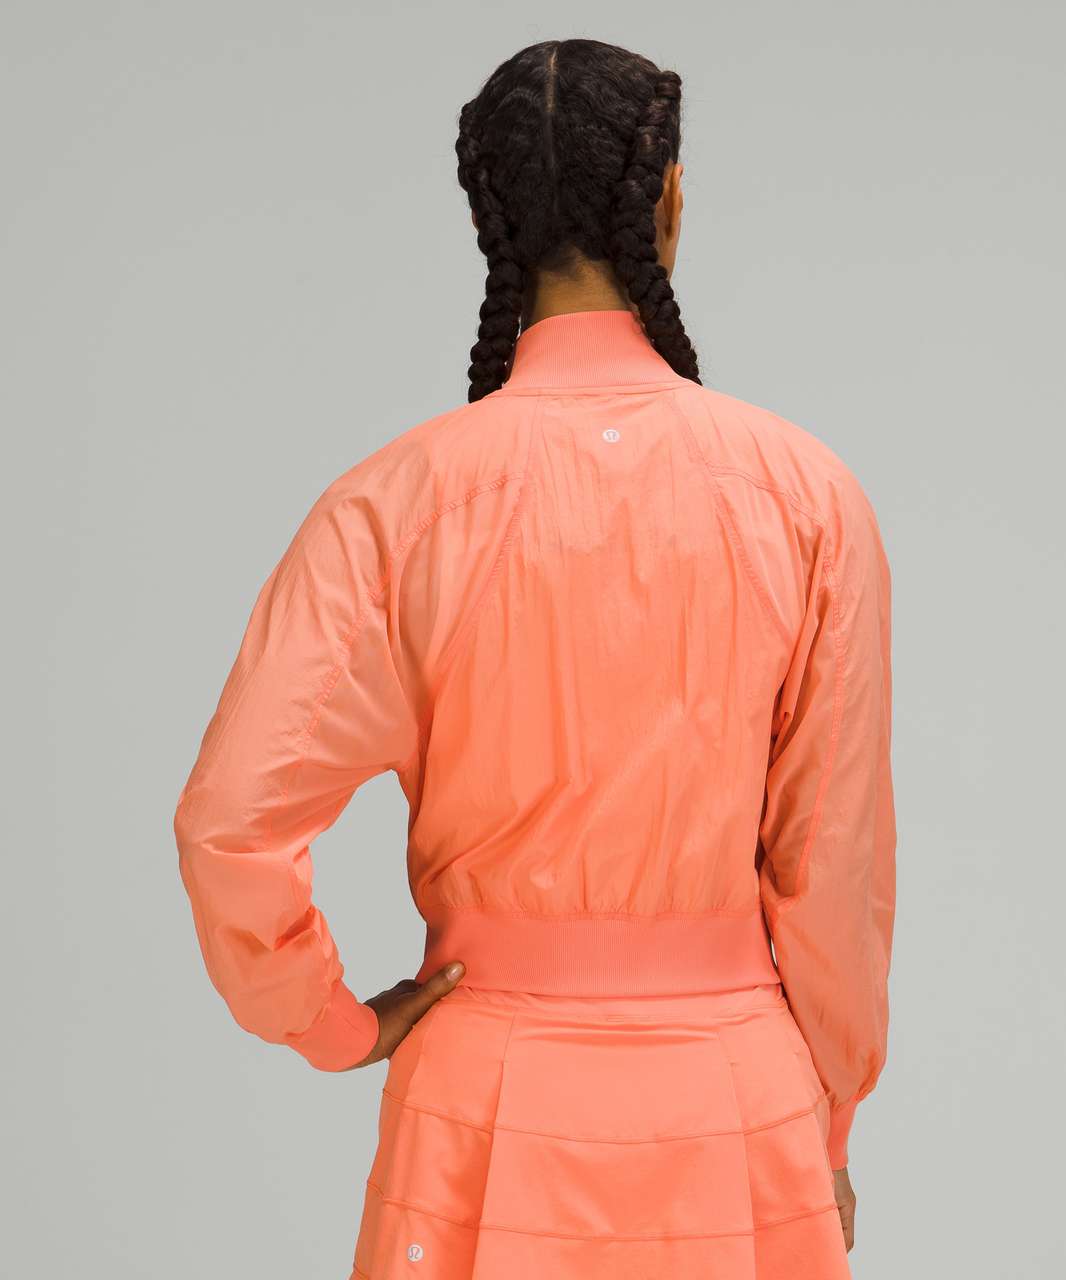 LULULEMON (2019) $138.00 Serve it Cropped Jacket in Golden Apricot